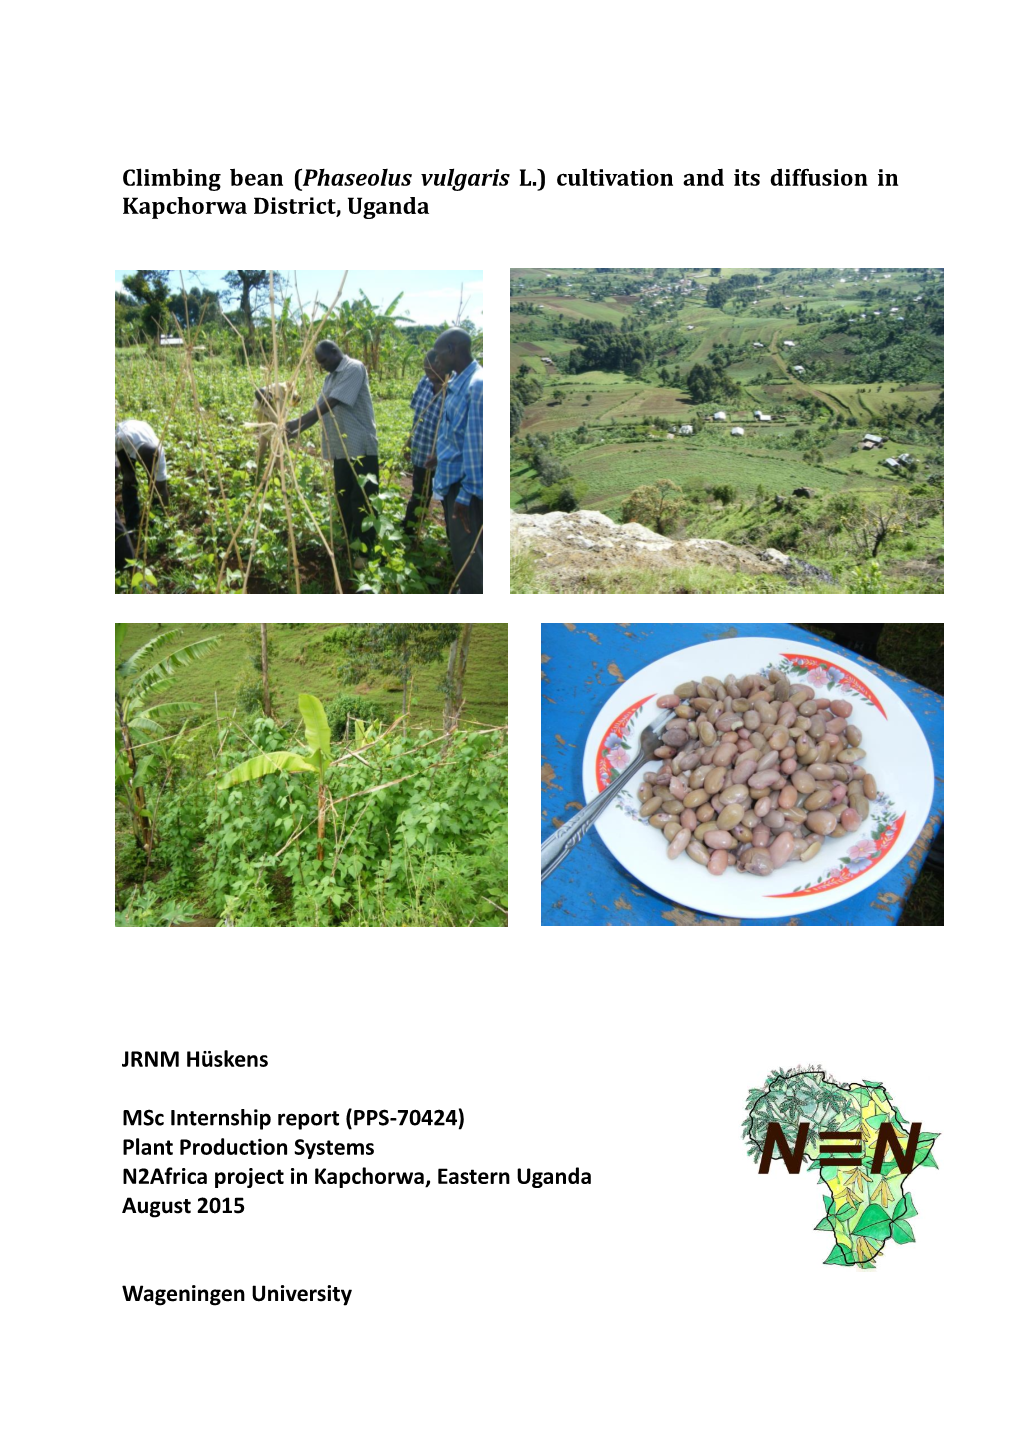 Climbing Bean (Phaseolus Vulgaris L.) Cultivation and Its Diffusion in Kapchorwa District, Uganda